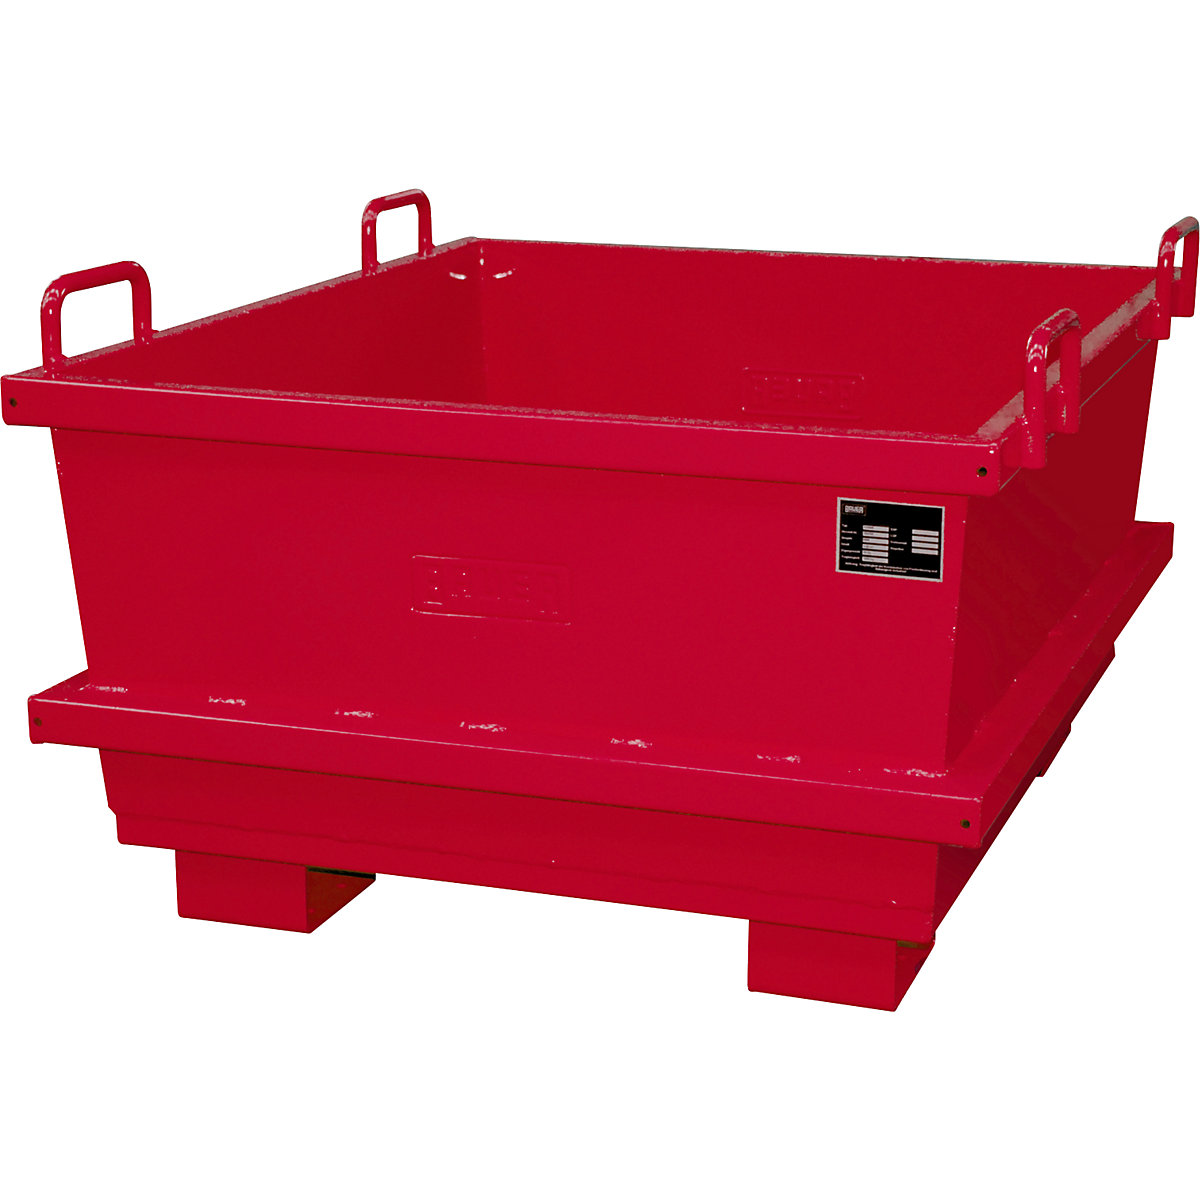 Container universal – eurokraft pro, volum 0,5 m³, roșu aprins, minimum 2 buc.